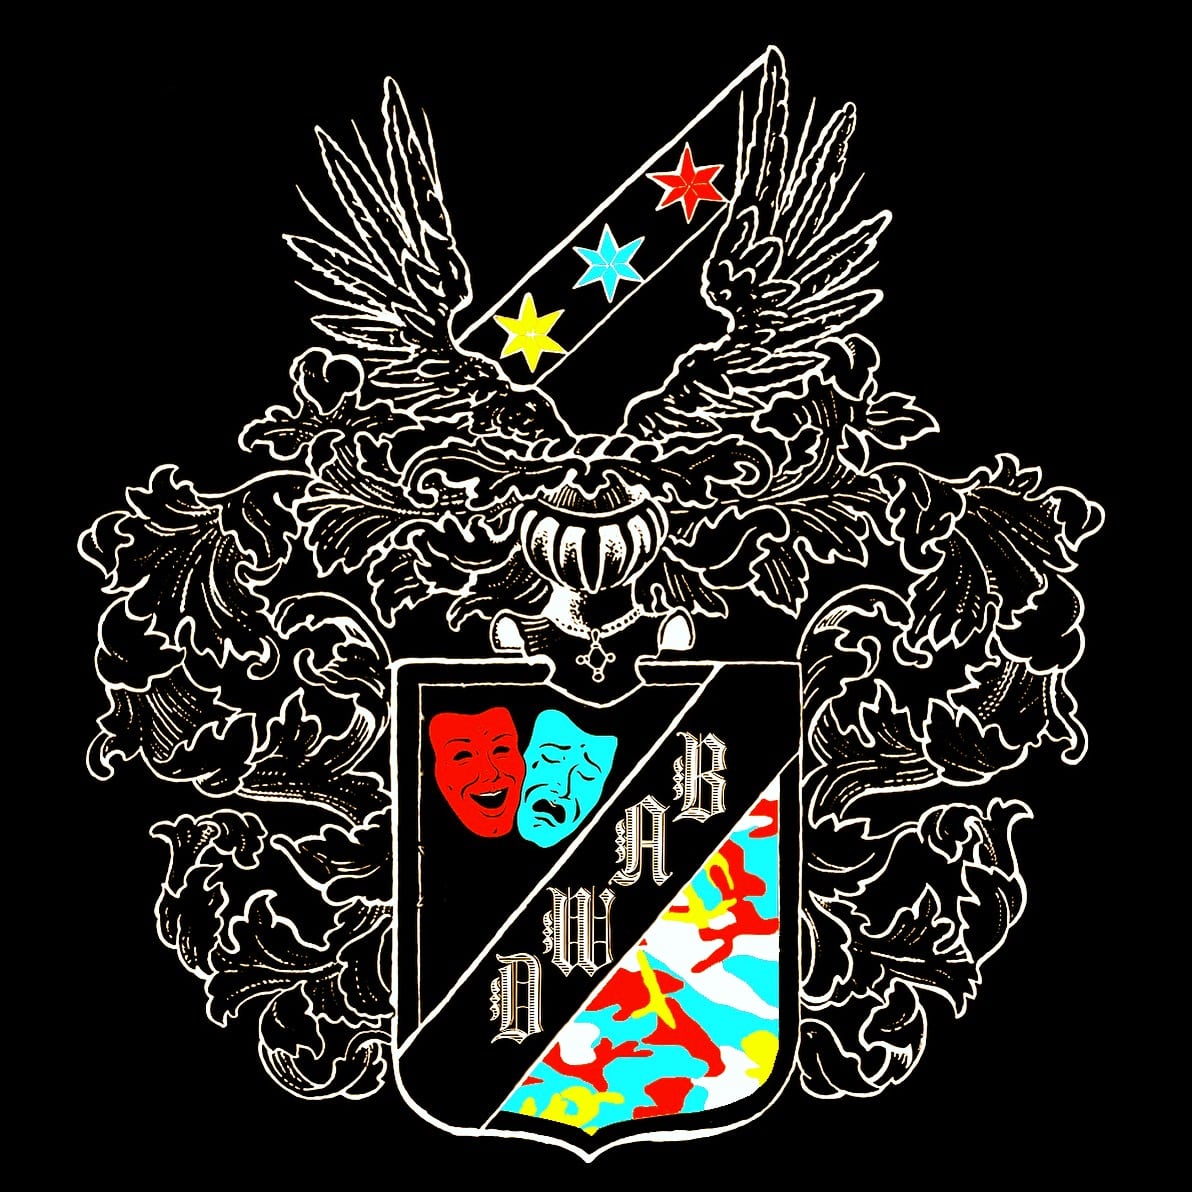 alpha phi omega coat of arms tattoo